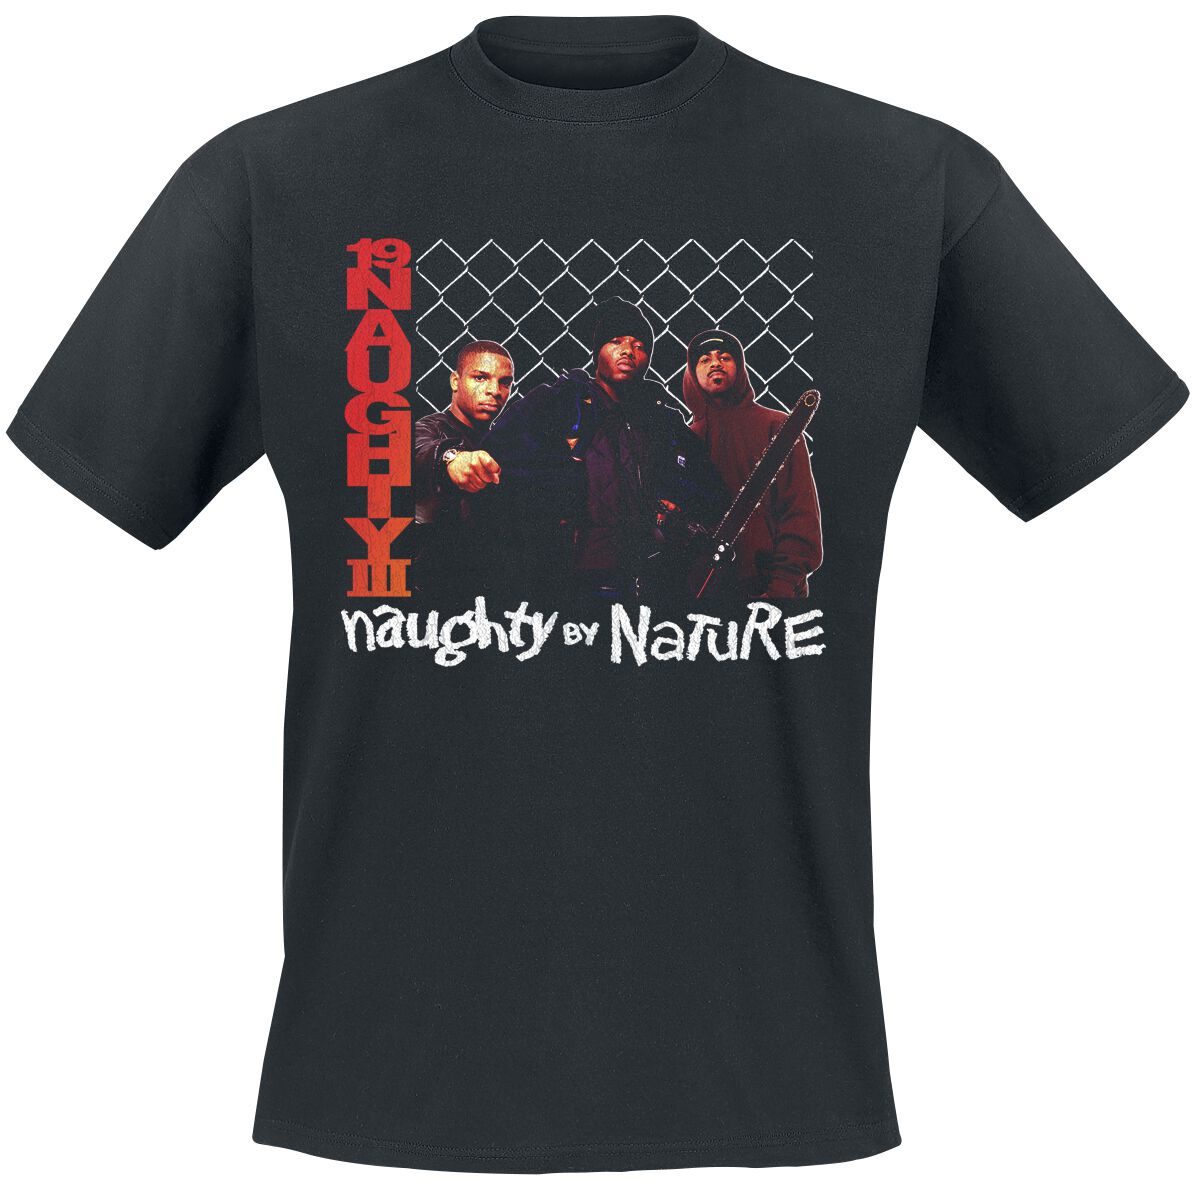 Naughty by Nature 19 Naughty 111 T-Shirt schwarz in S